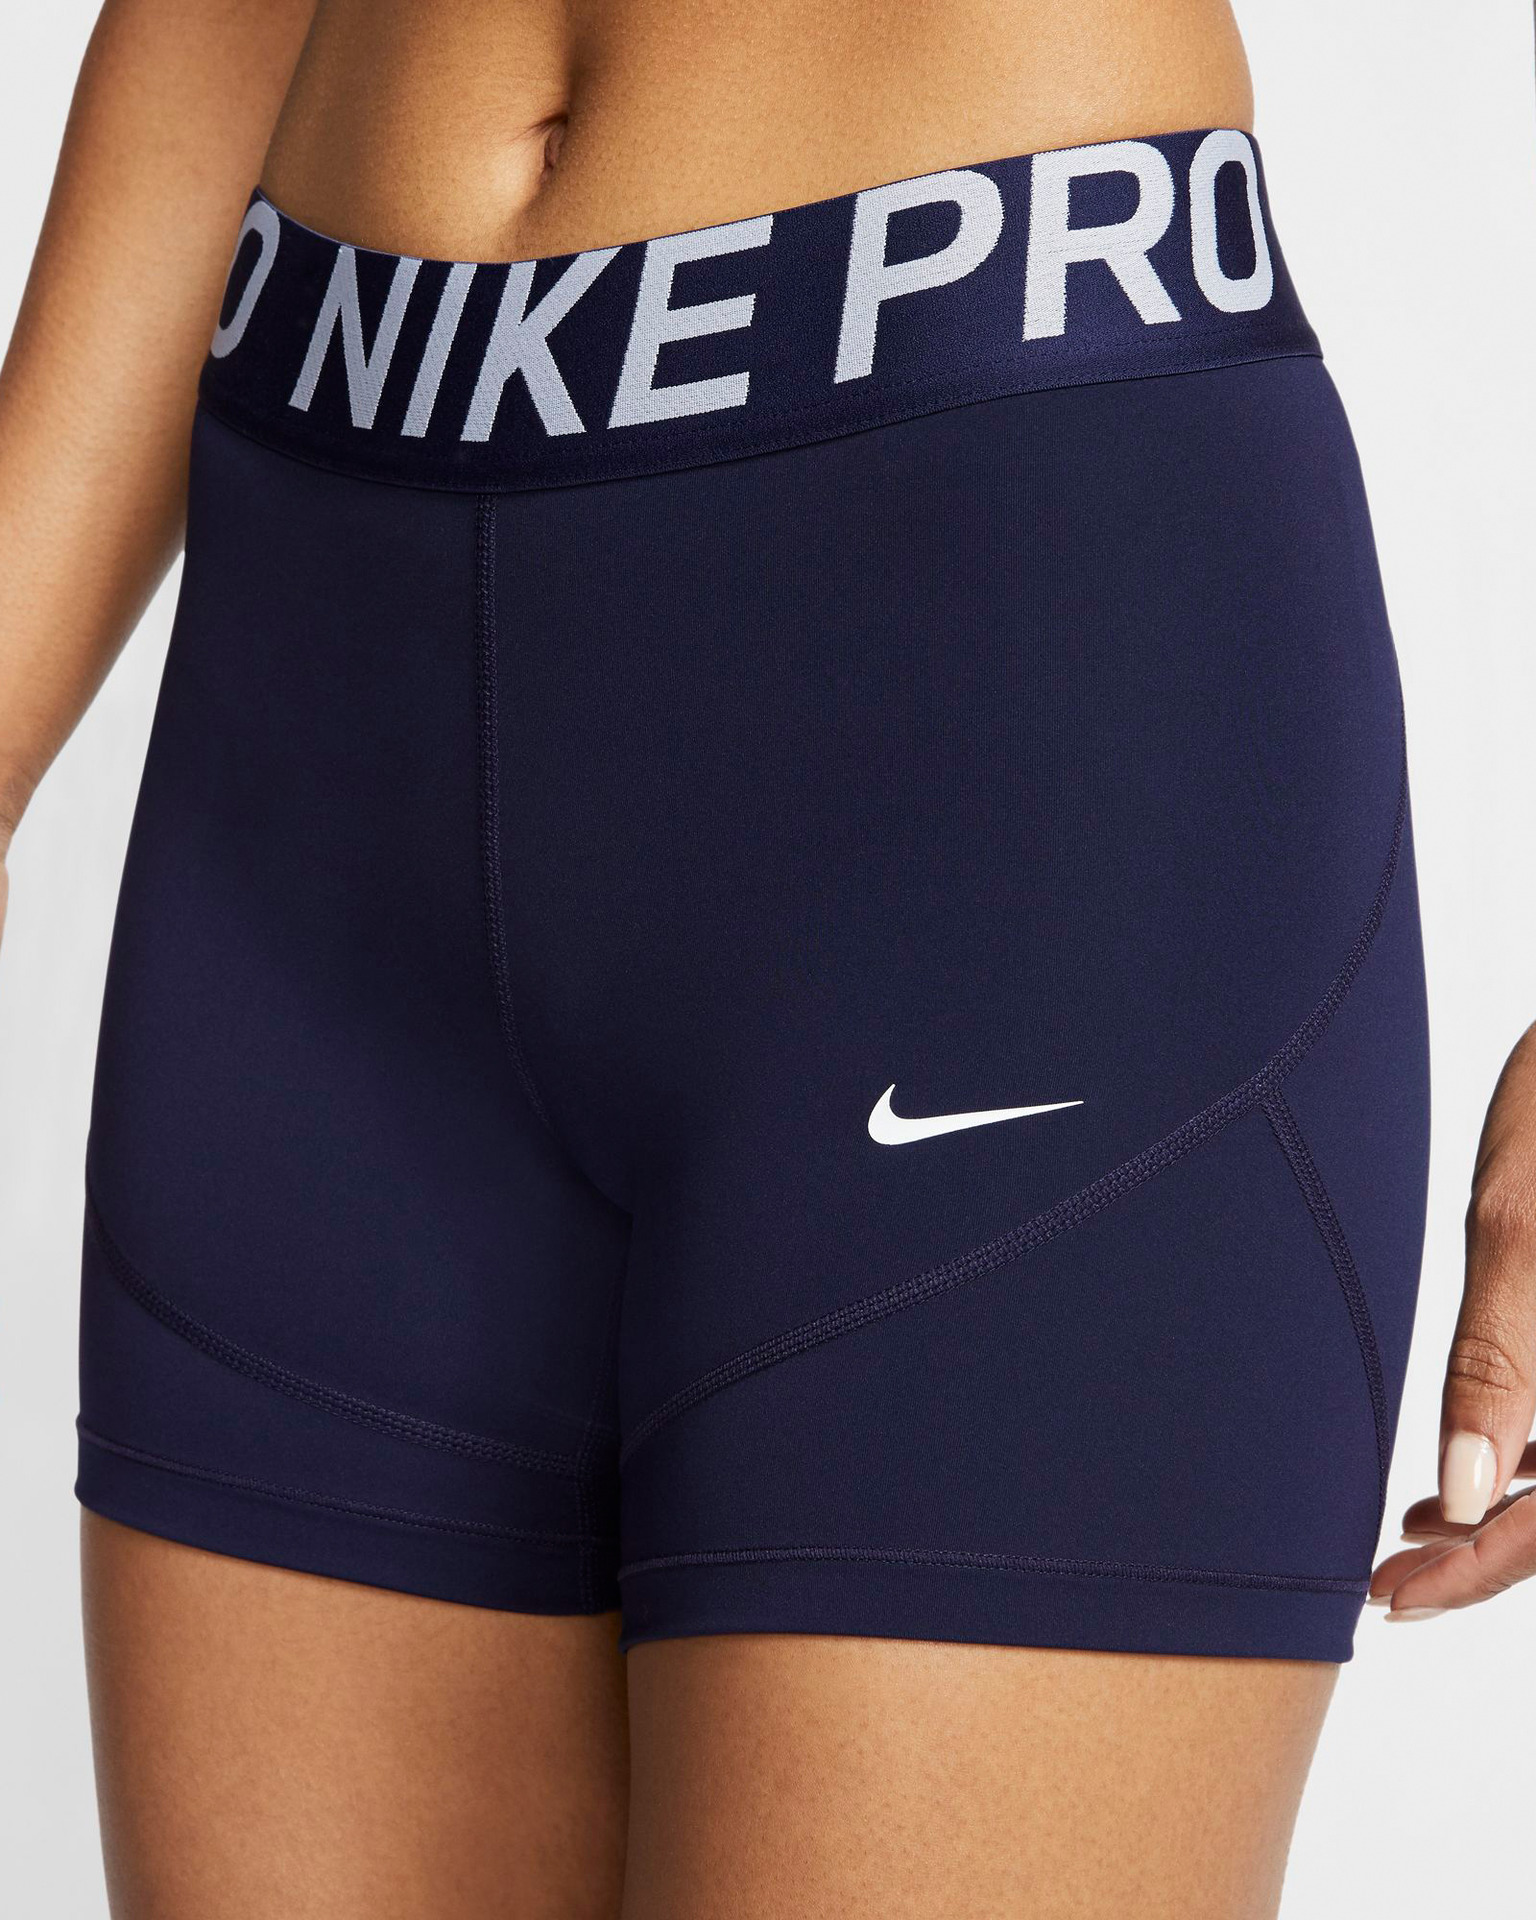 Шорты найк про. Nike Pro shorts. Nike Pro 365. Nike Pro 884500801905. Nike Pro 18.